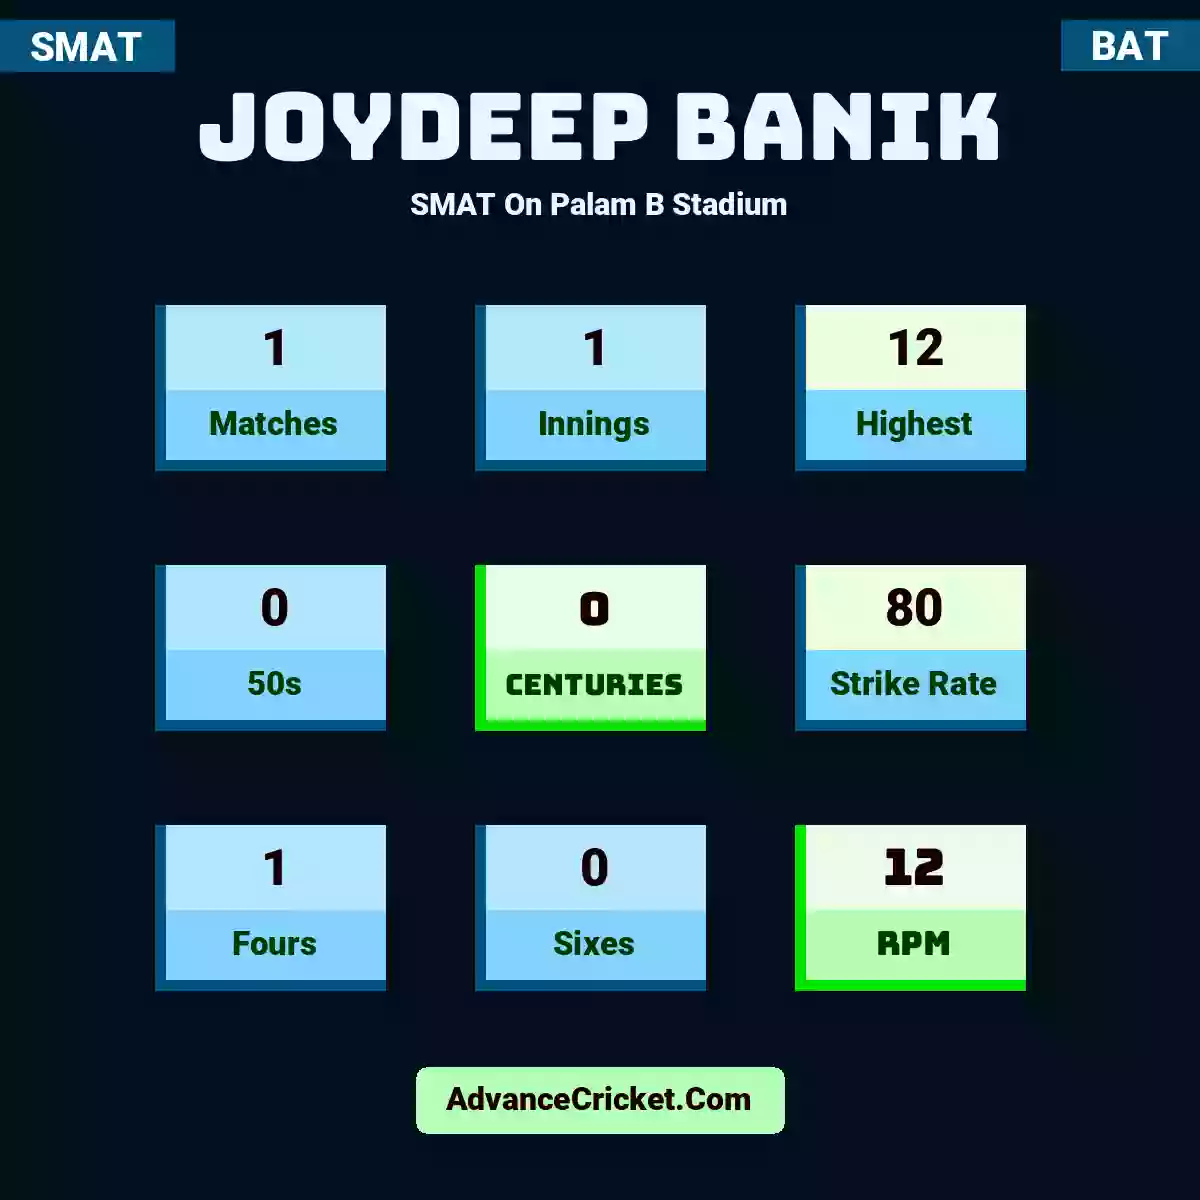 Joydeep Banik SMAT  On Palam B Stadium, Joydeep Banik played 1 matches, scored 12 runs as highest, 0 half-centuries, and 0 centuries, with a strike rate of 80. J.Banik hit 1 fours and 0 sixes, with an RPM of 12.